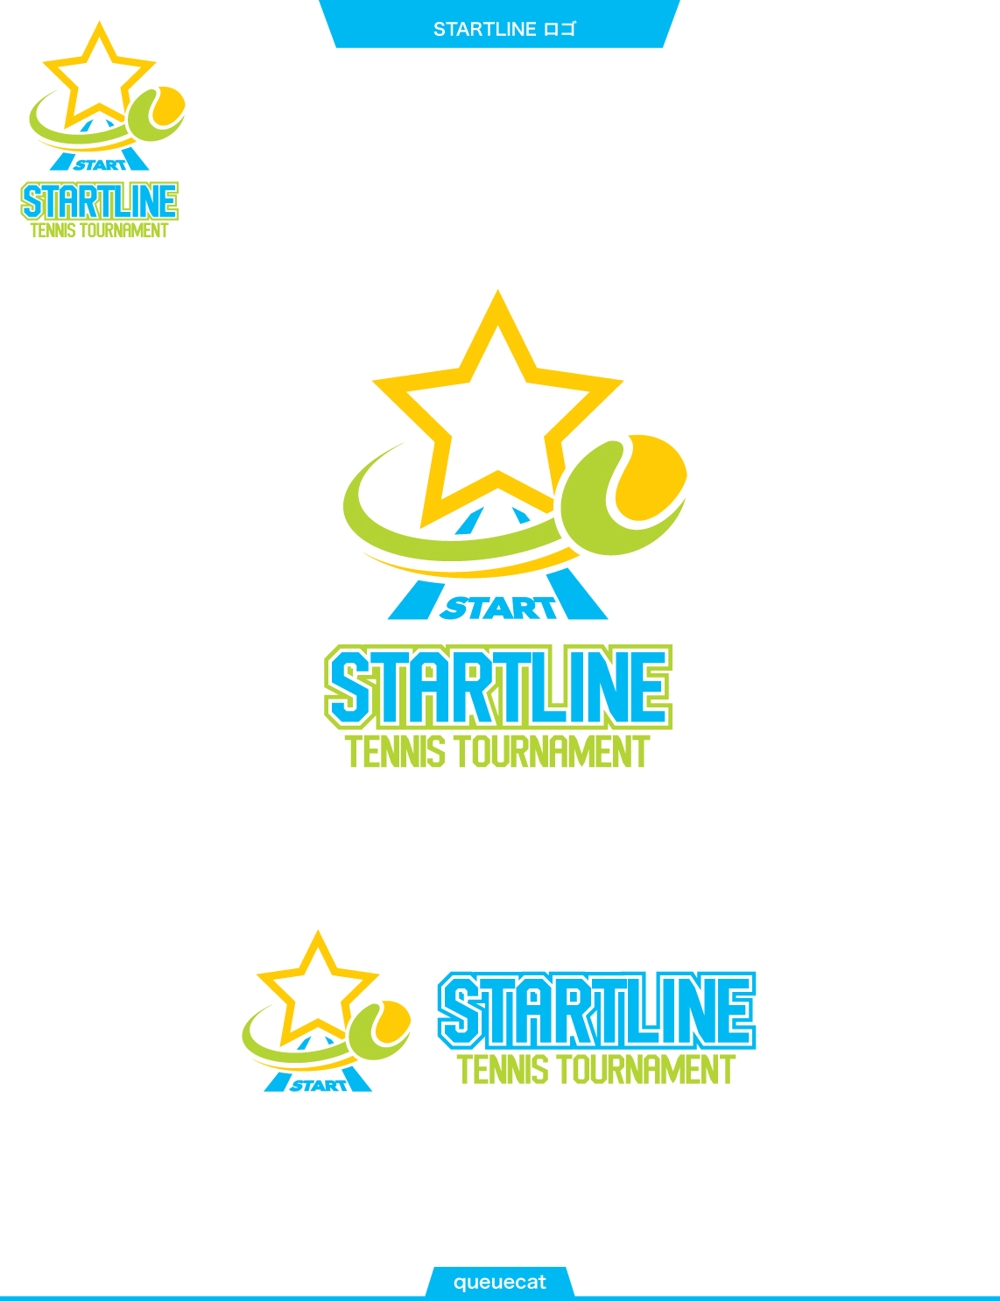 STARTLINE2_1.jpg